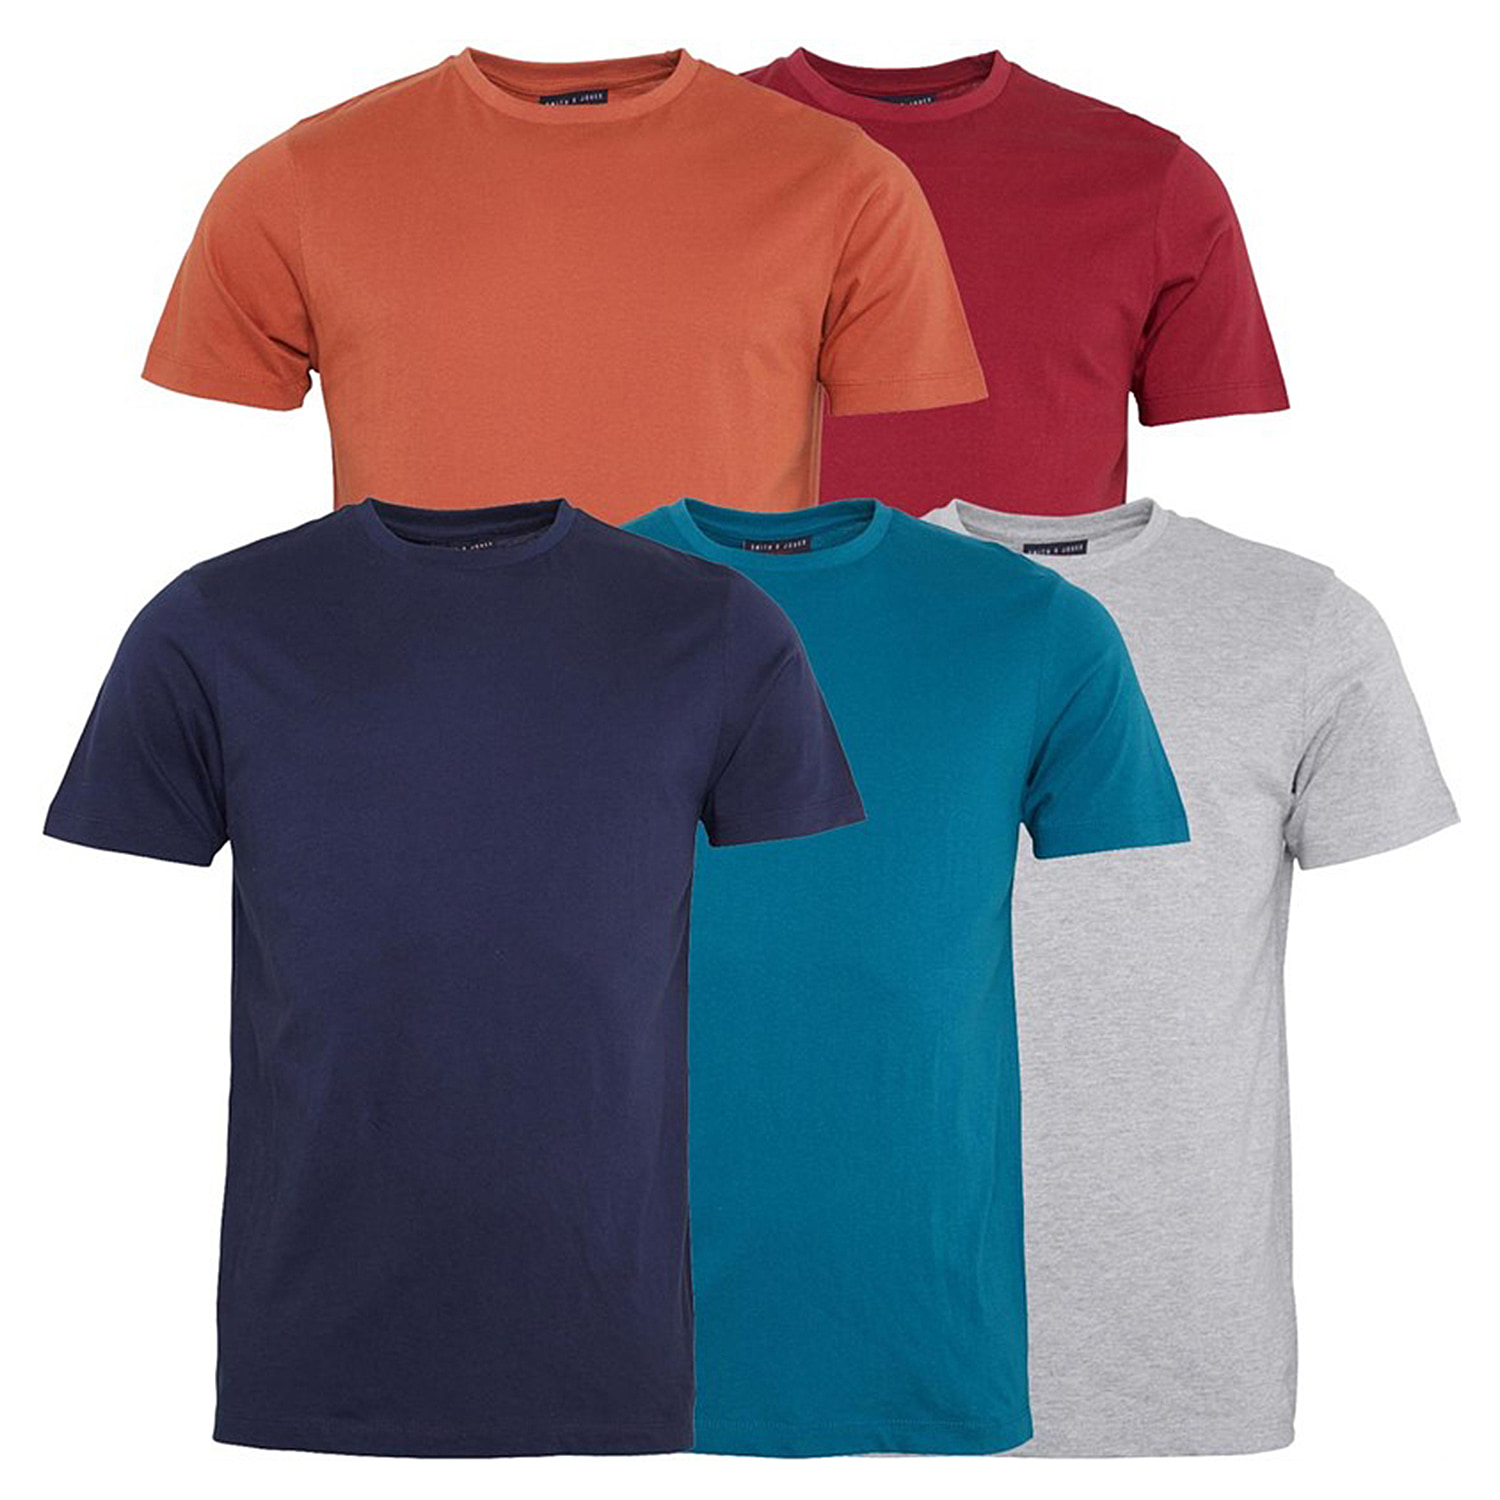 Value-Buy-Set-of-5-Smith-Jones-100-Cotton-T-Shirts-Size-M